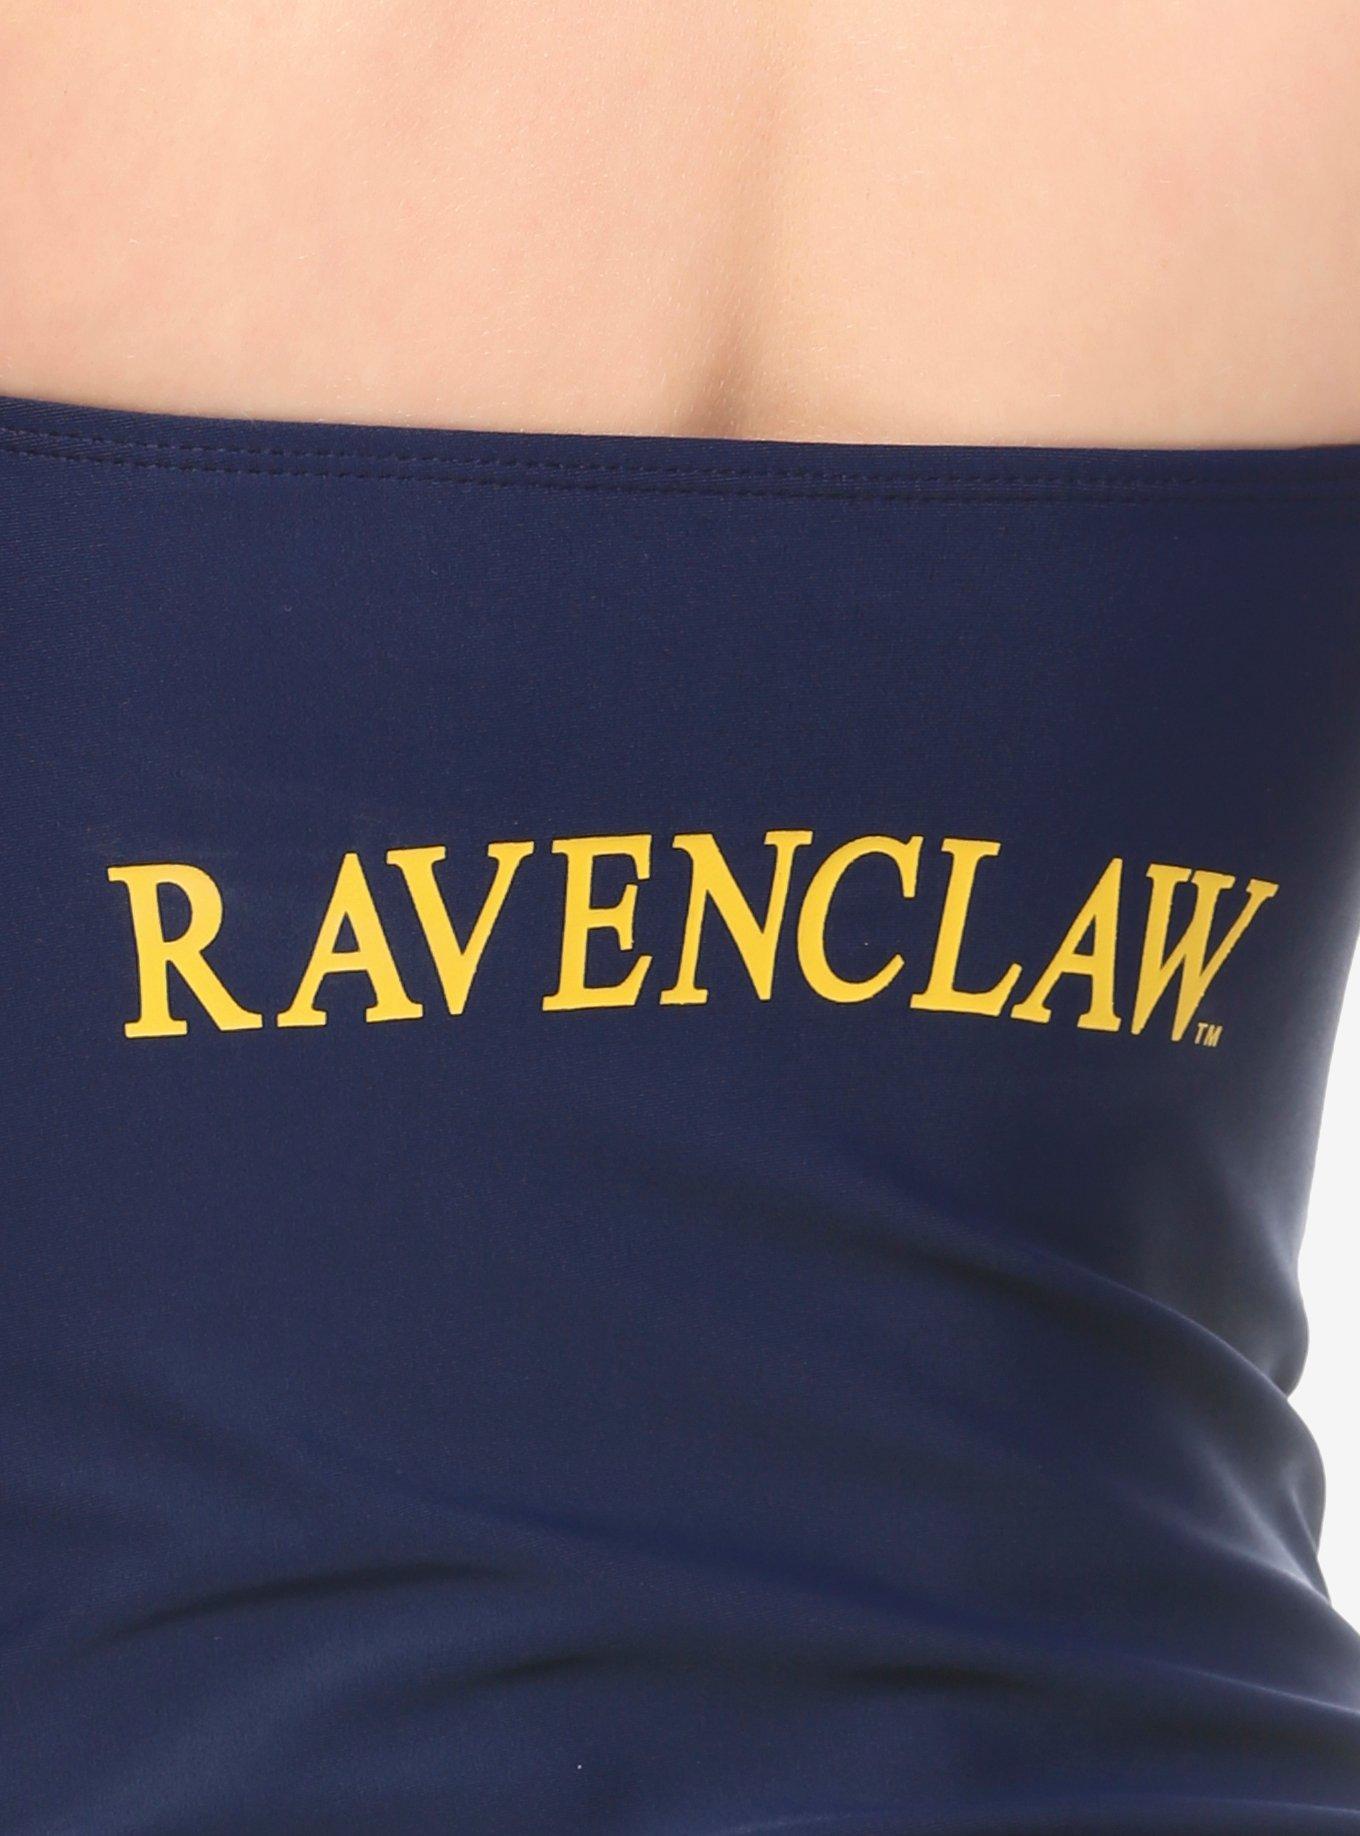 Harry Potter Ravenclaw Swimsuit, MULTI, alternate